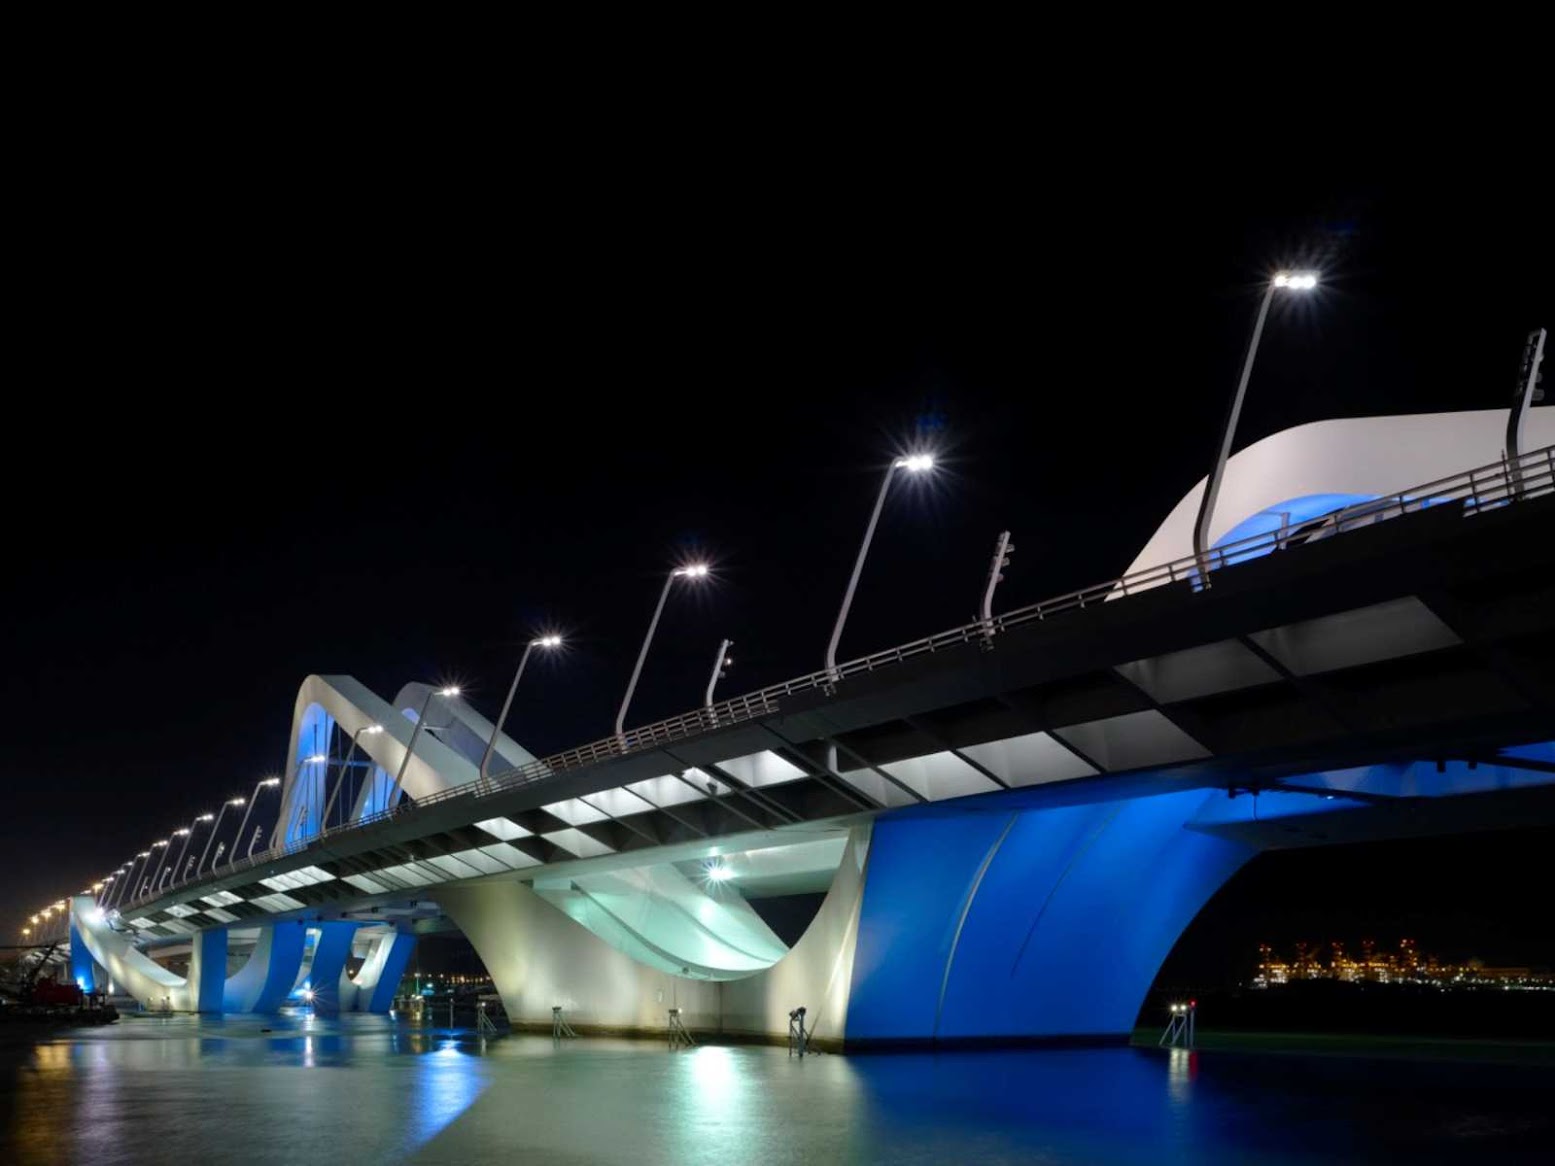 Abu Dhabi - Emirati Arabi Uniti: [SHEIKH ZAYED BRIDGE BY ZAHA HADID ARCHITECTS]